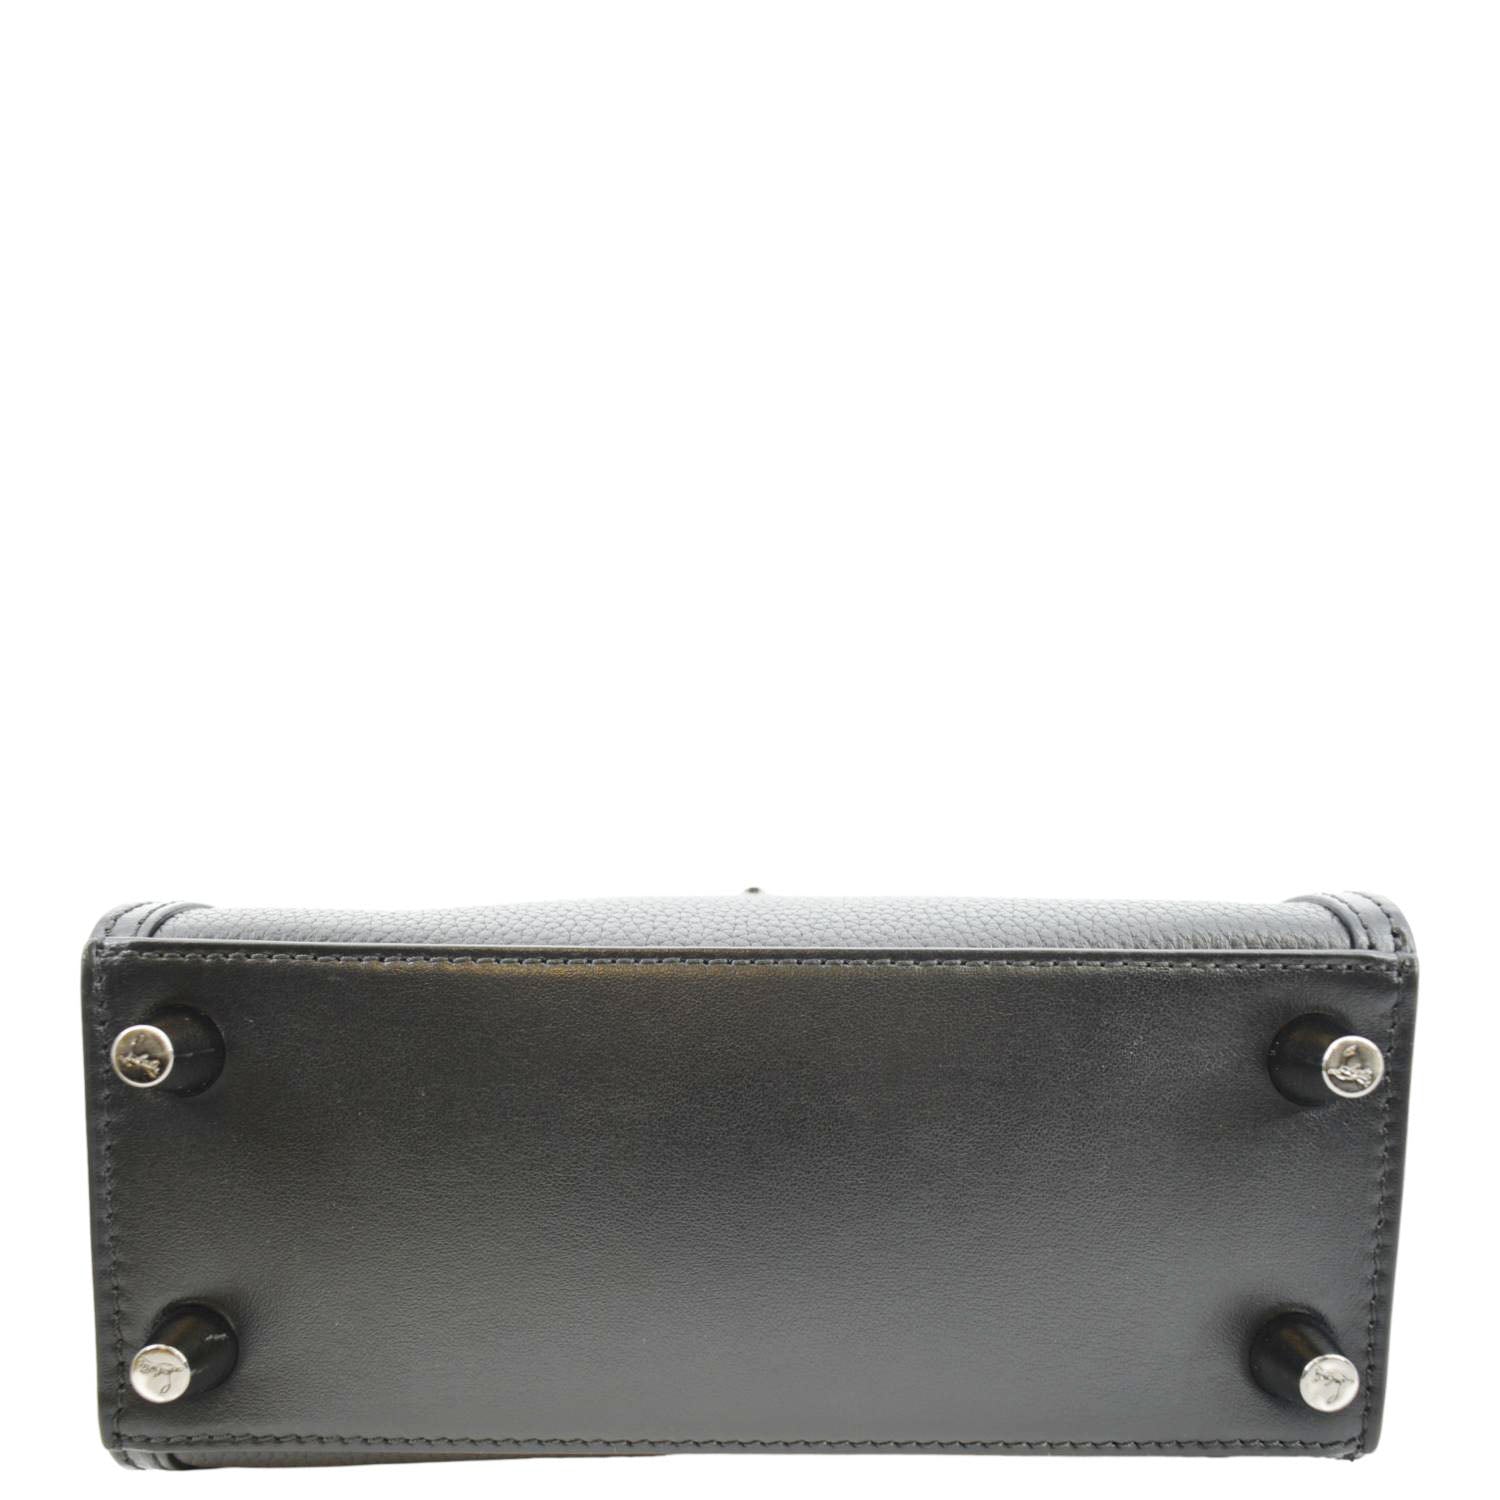 Paloma leather handbag Christian Louboutin Brown in Leather - 31115124